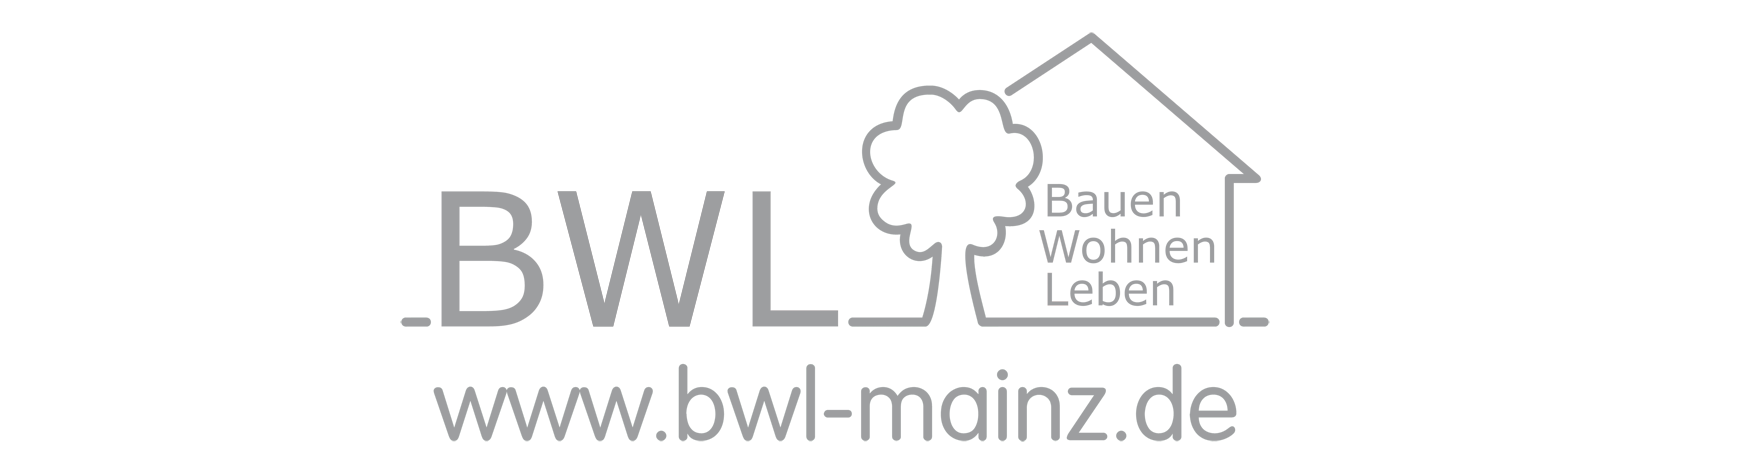 BWL Mainz